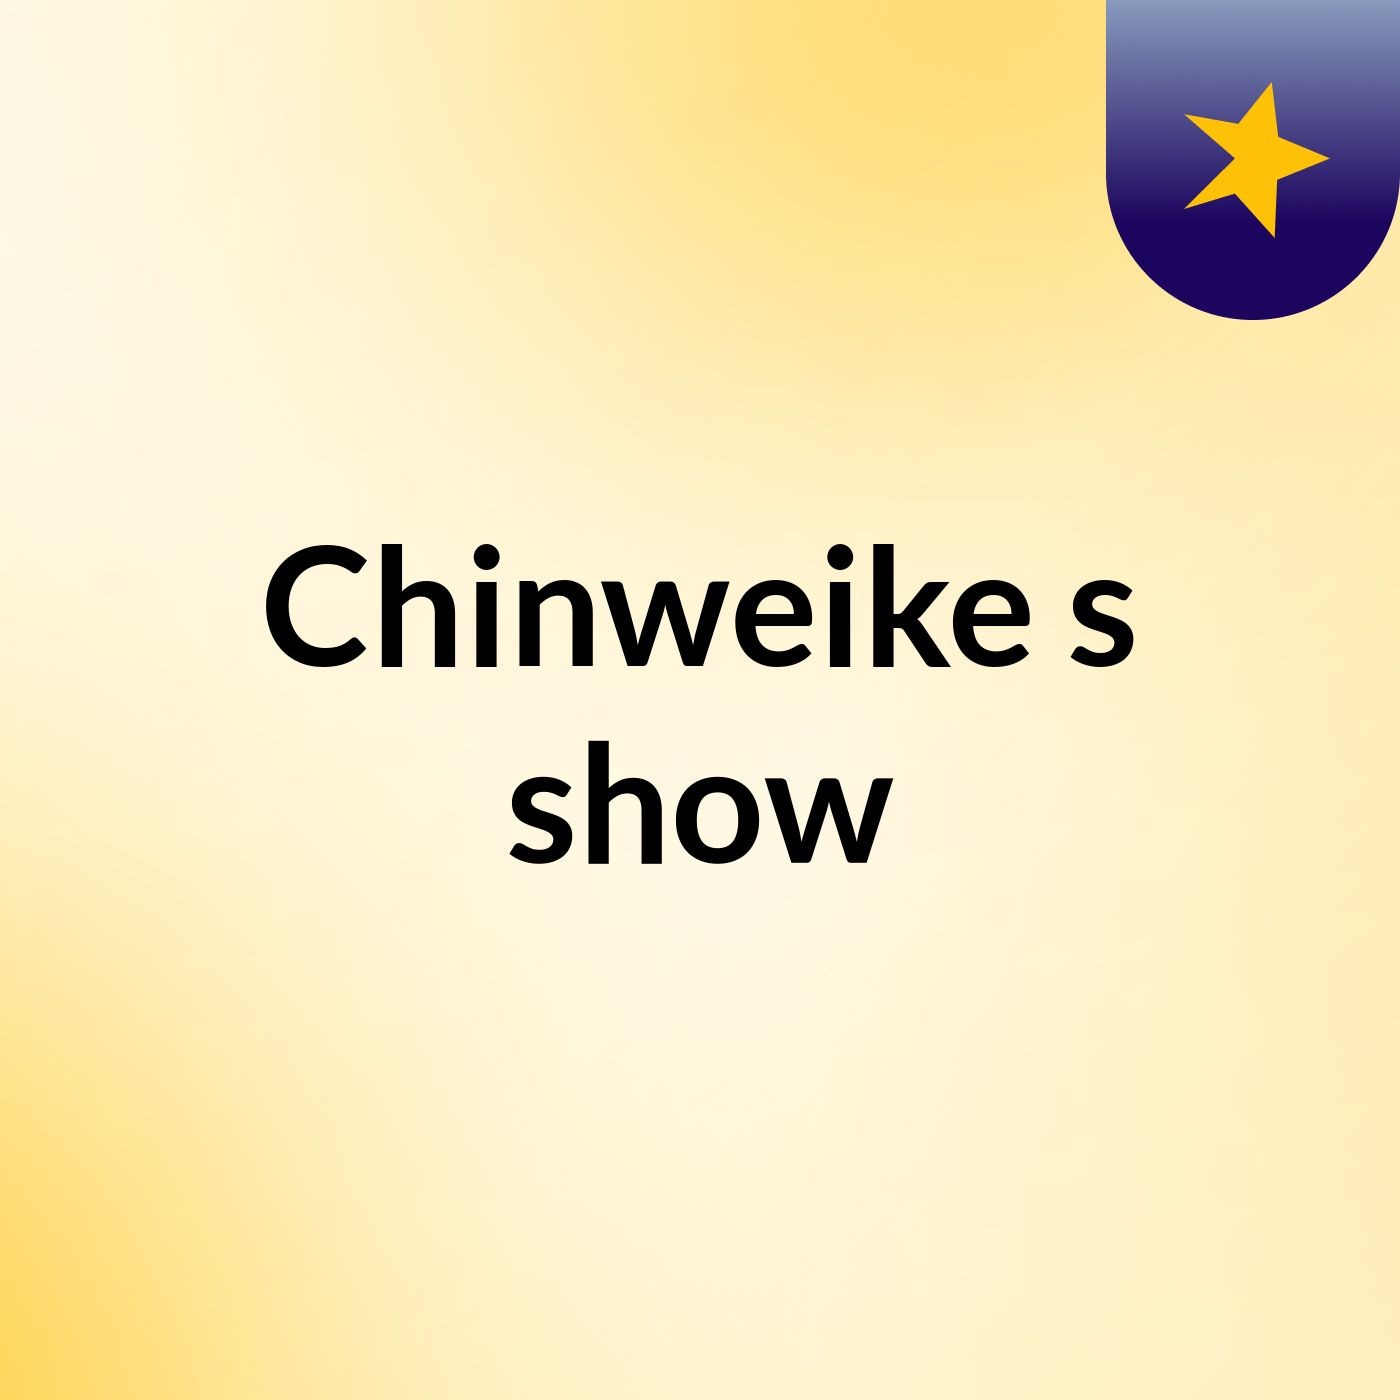 Chinweike's show